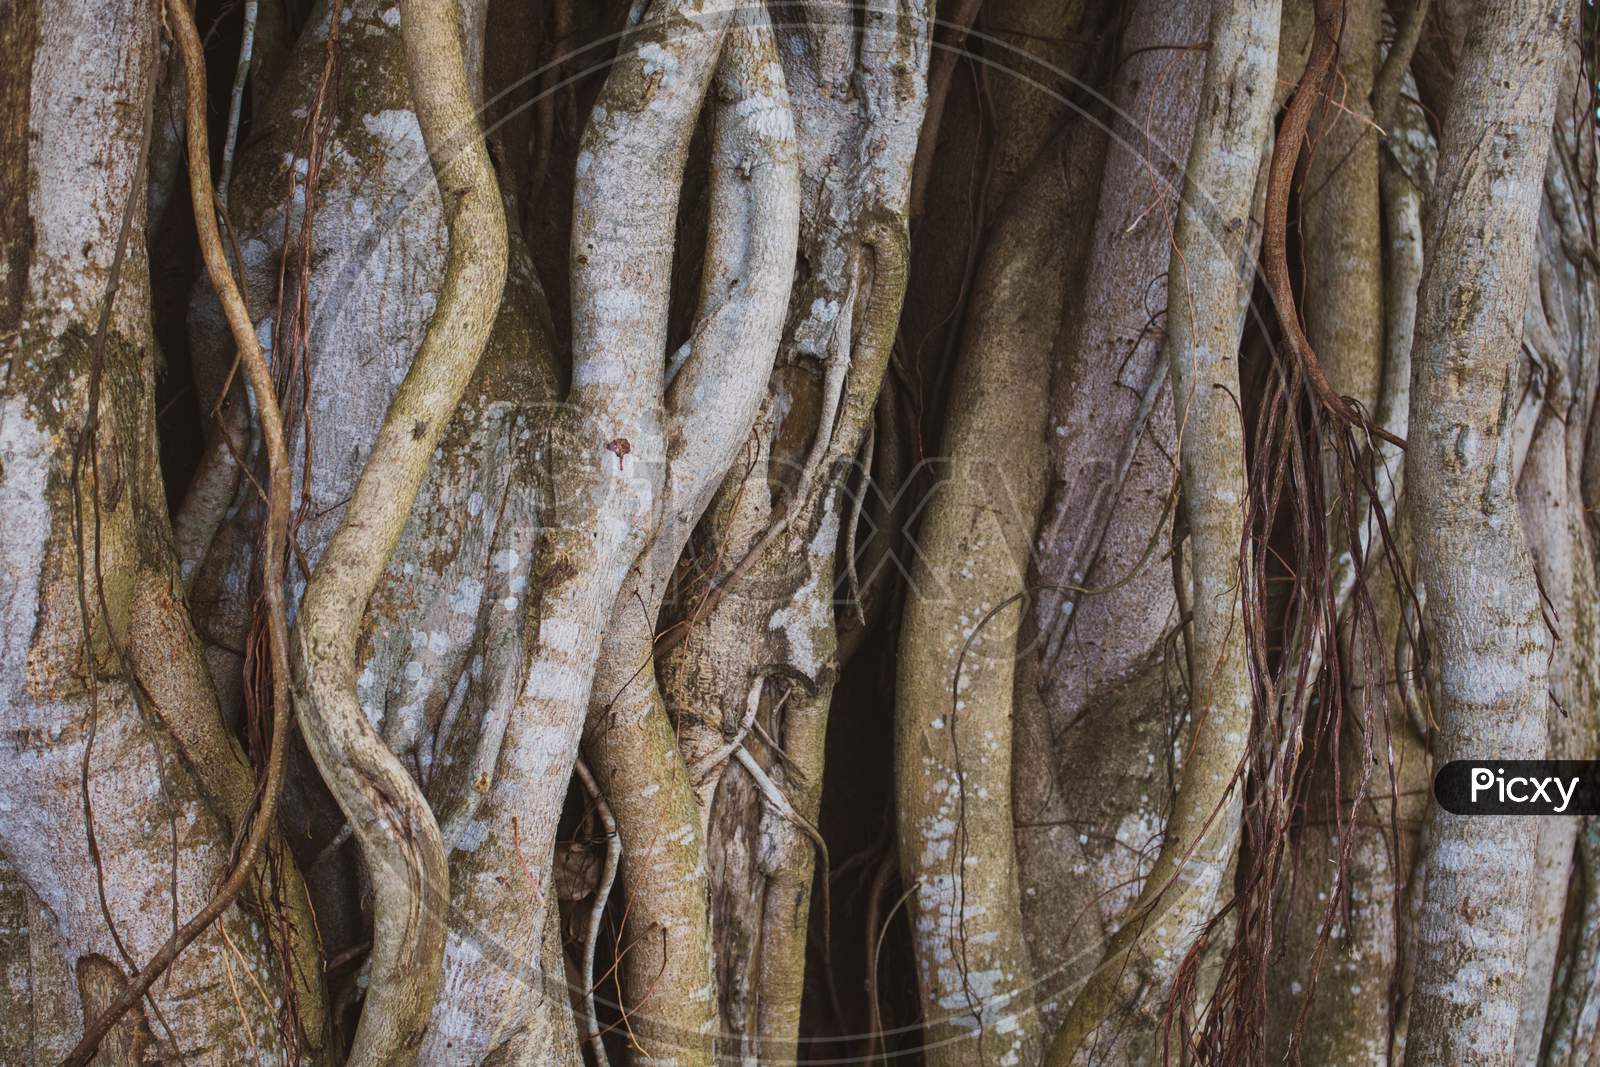 Shot Of A Large Banyan Tree In Bangladesh. Picture Of The Roots Of A Large Banyan Tree Along The River.